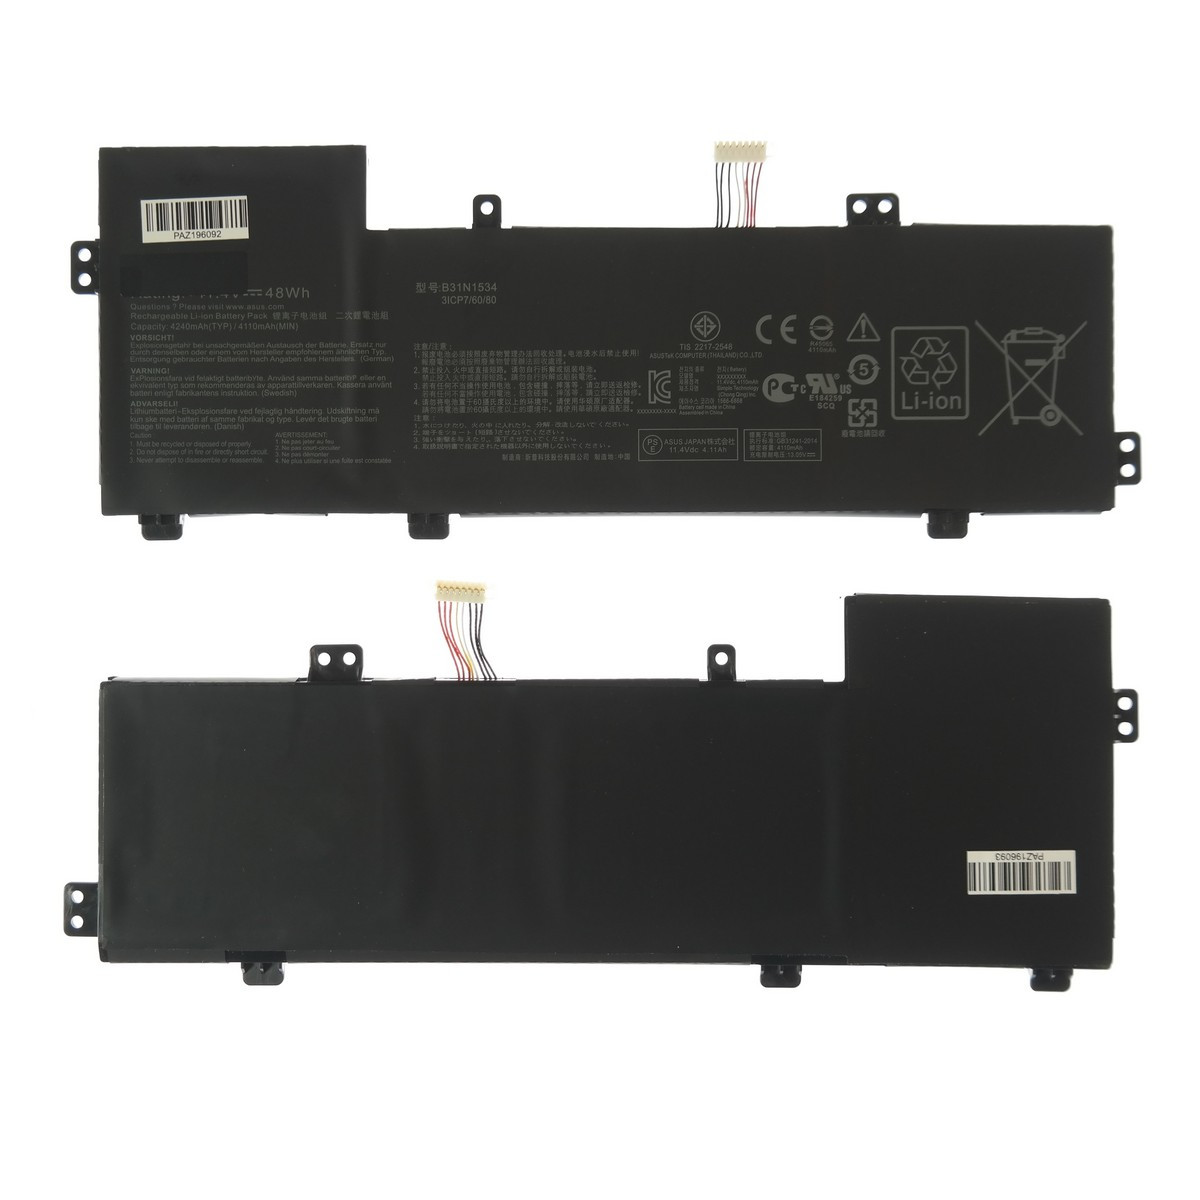 Батарея для ноутбука Asus Zenbook UX510 li-pol 11,4v 48wh черный